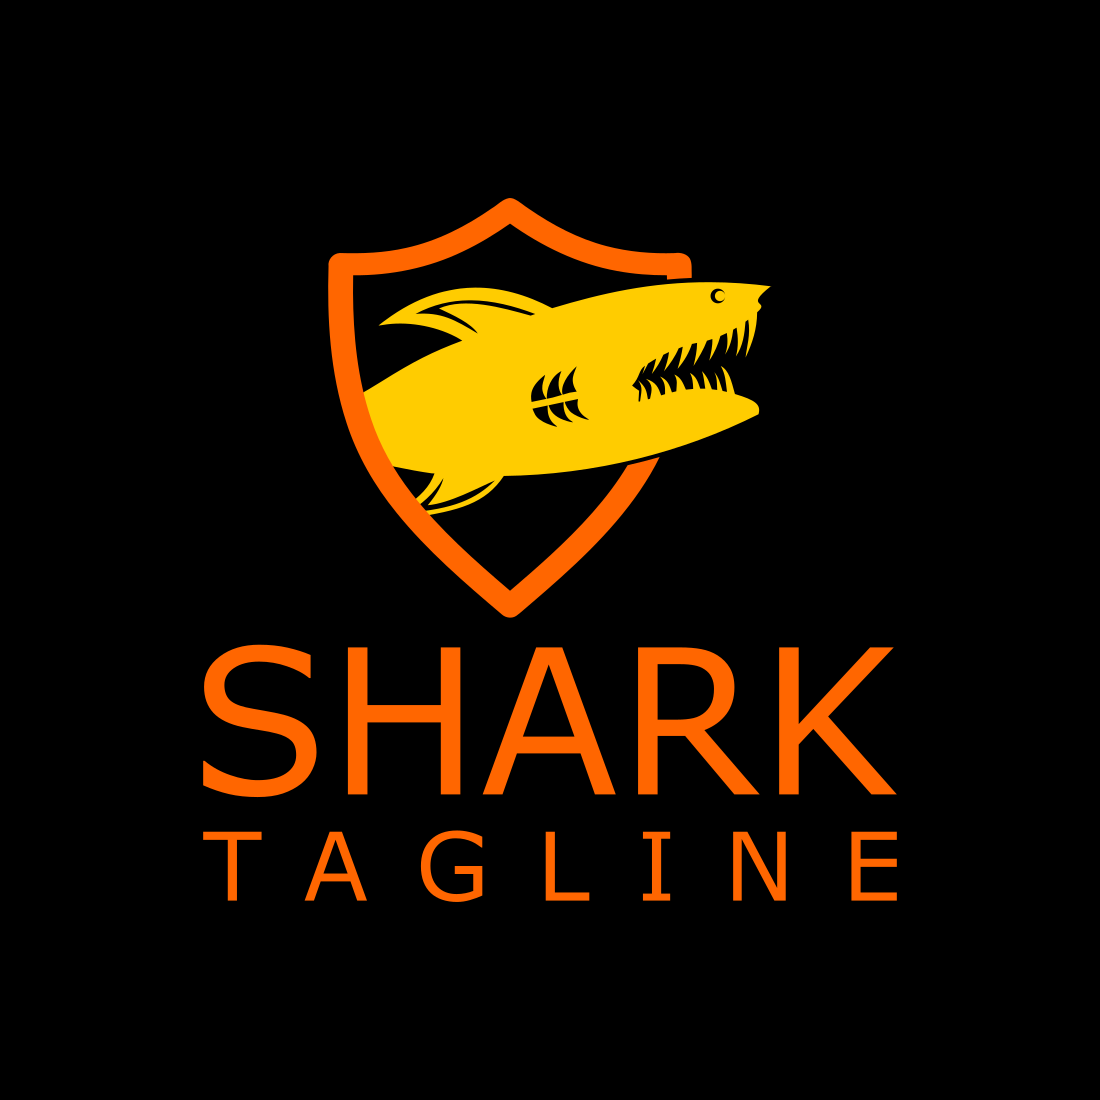 Shark Vintage Style Logo Design Template previews.